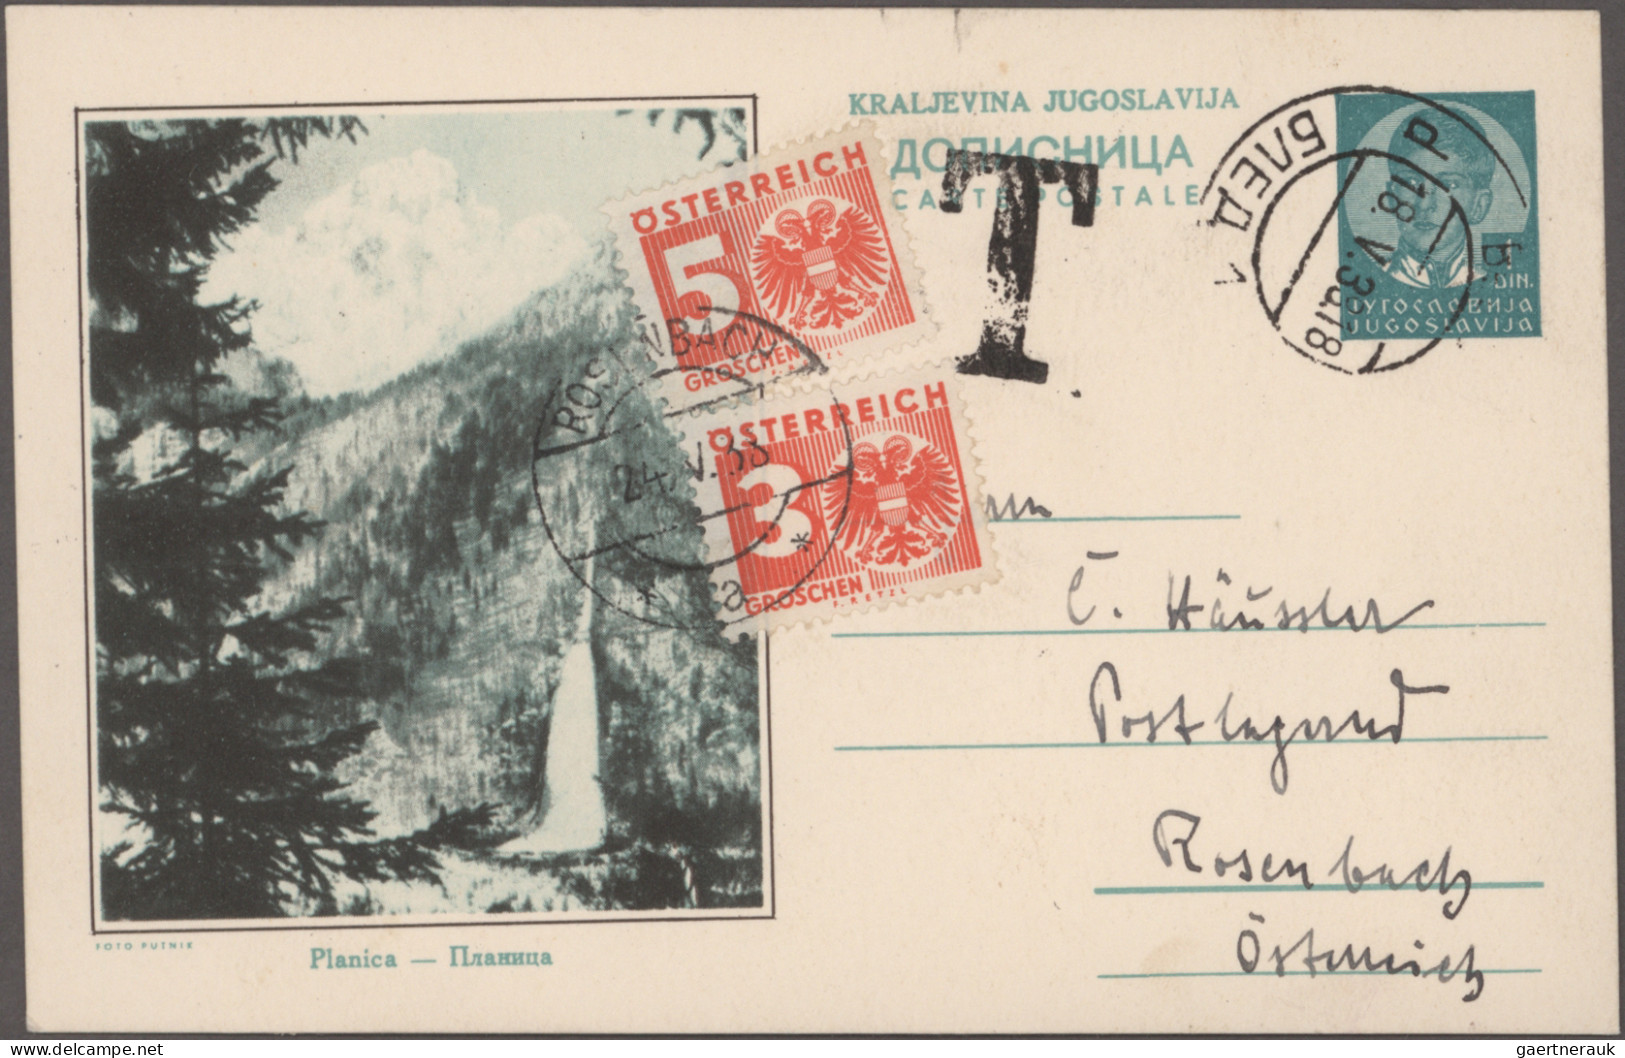 Yugoslavia - postal stationery: 1933-1938 - postal stationery picture postcards: